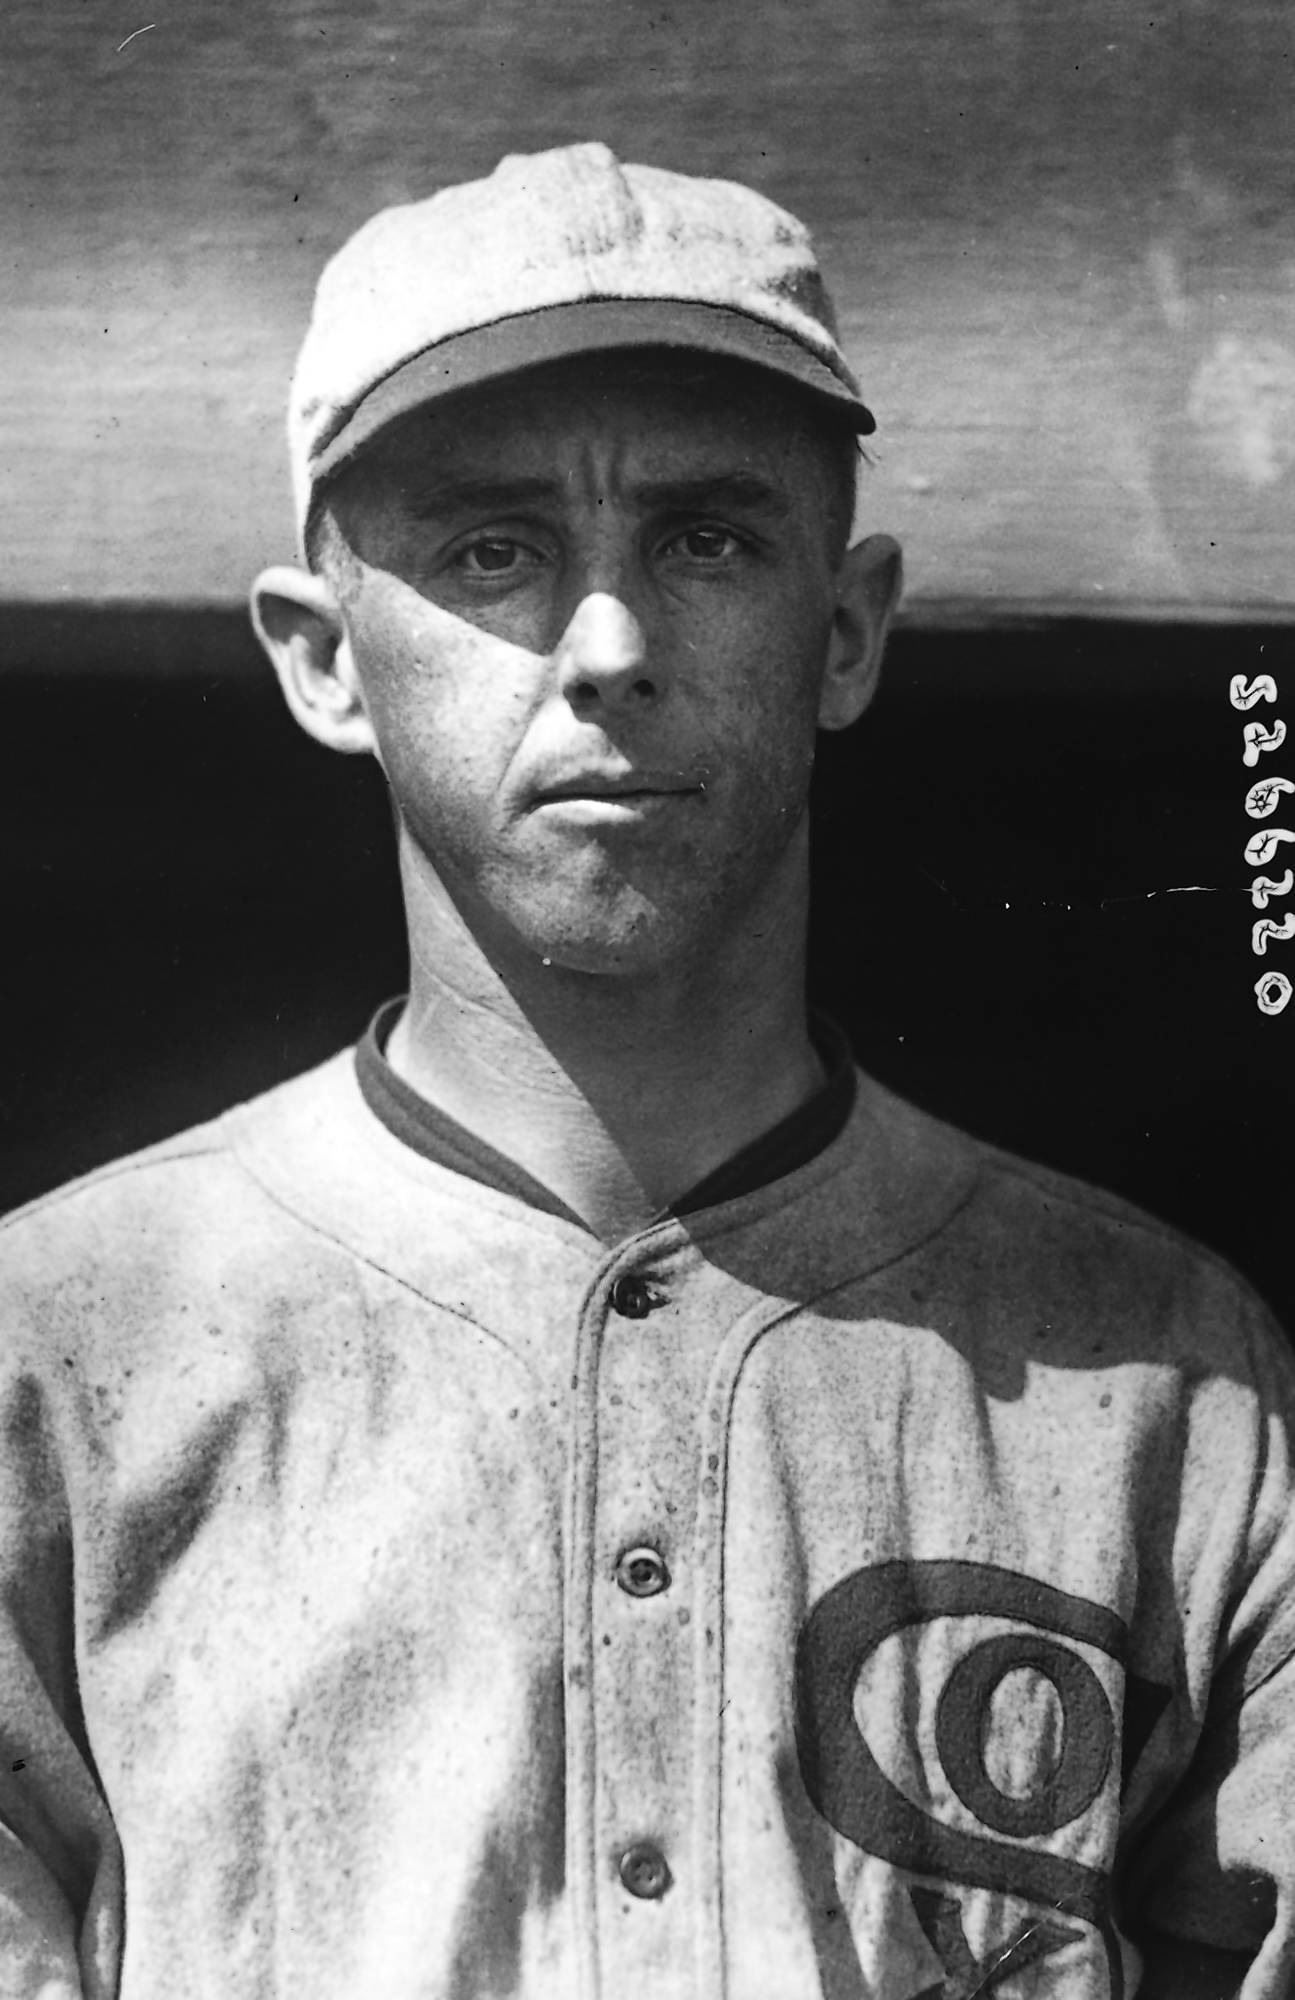 Baseball's darkest days: Shoeless Joe and the 1919 Black Sox scandal